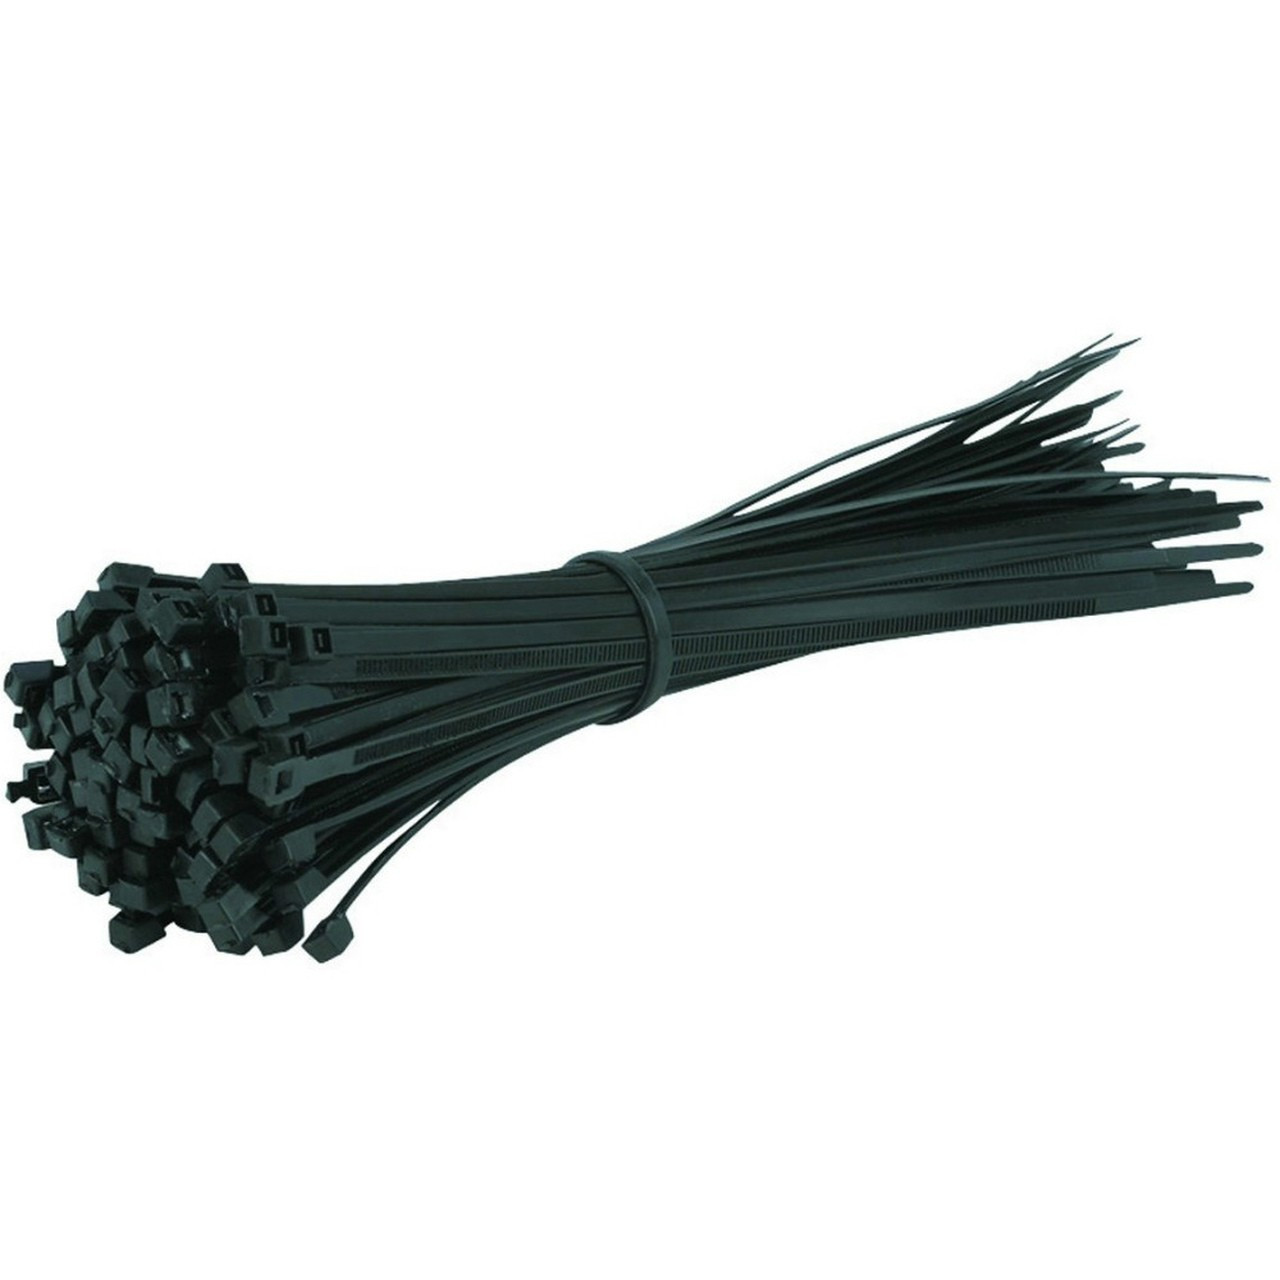 Cable Tie Black 200 x 4.8mm 100pk